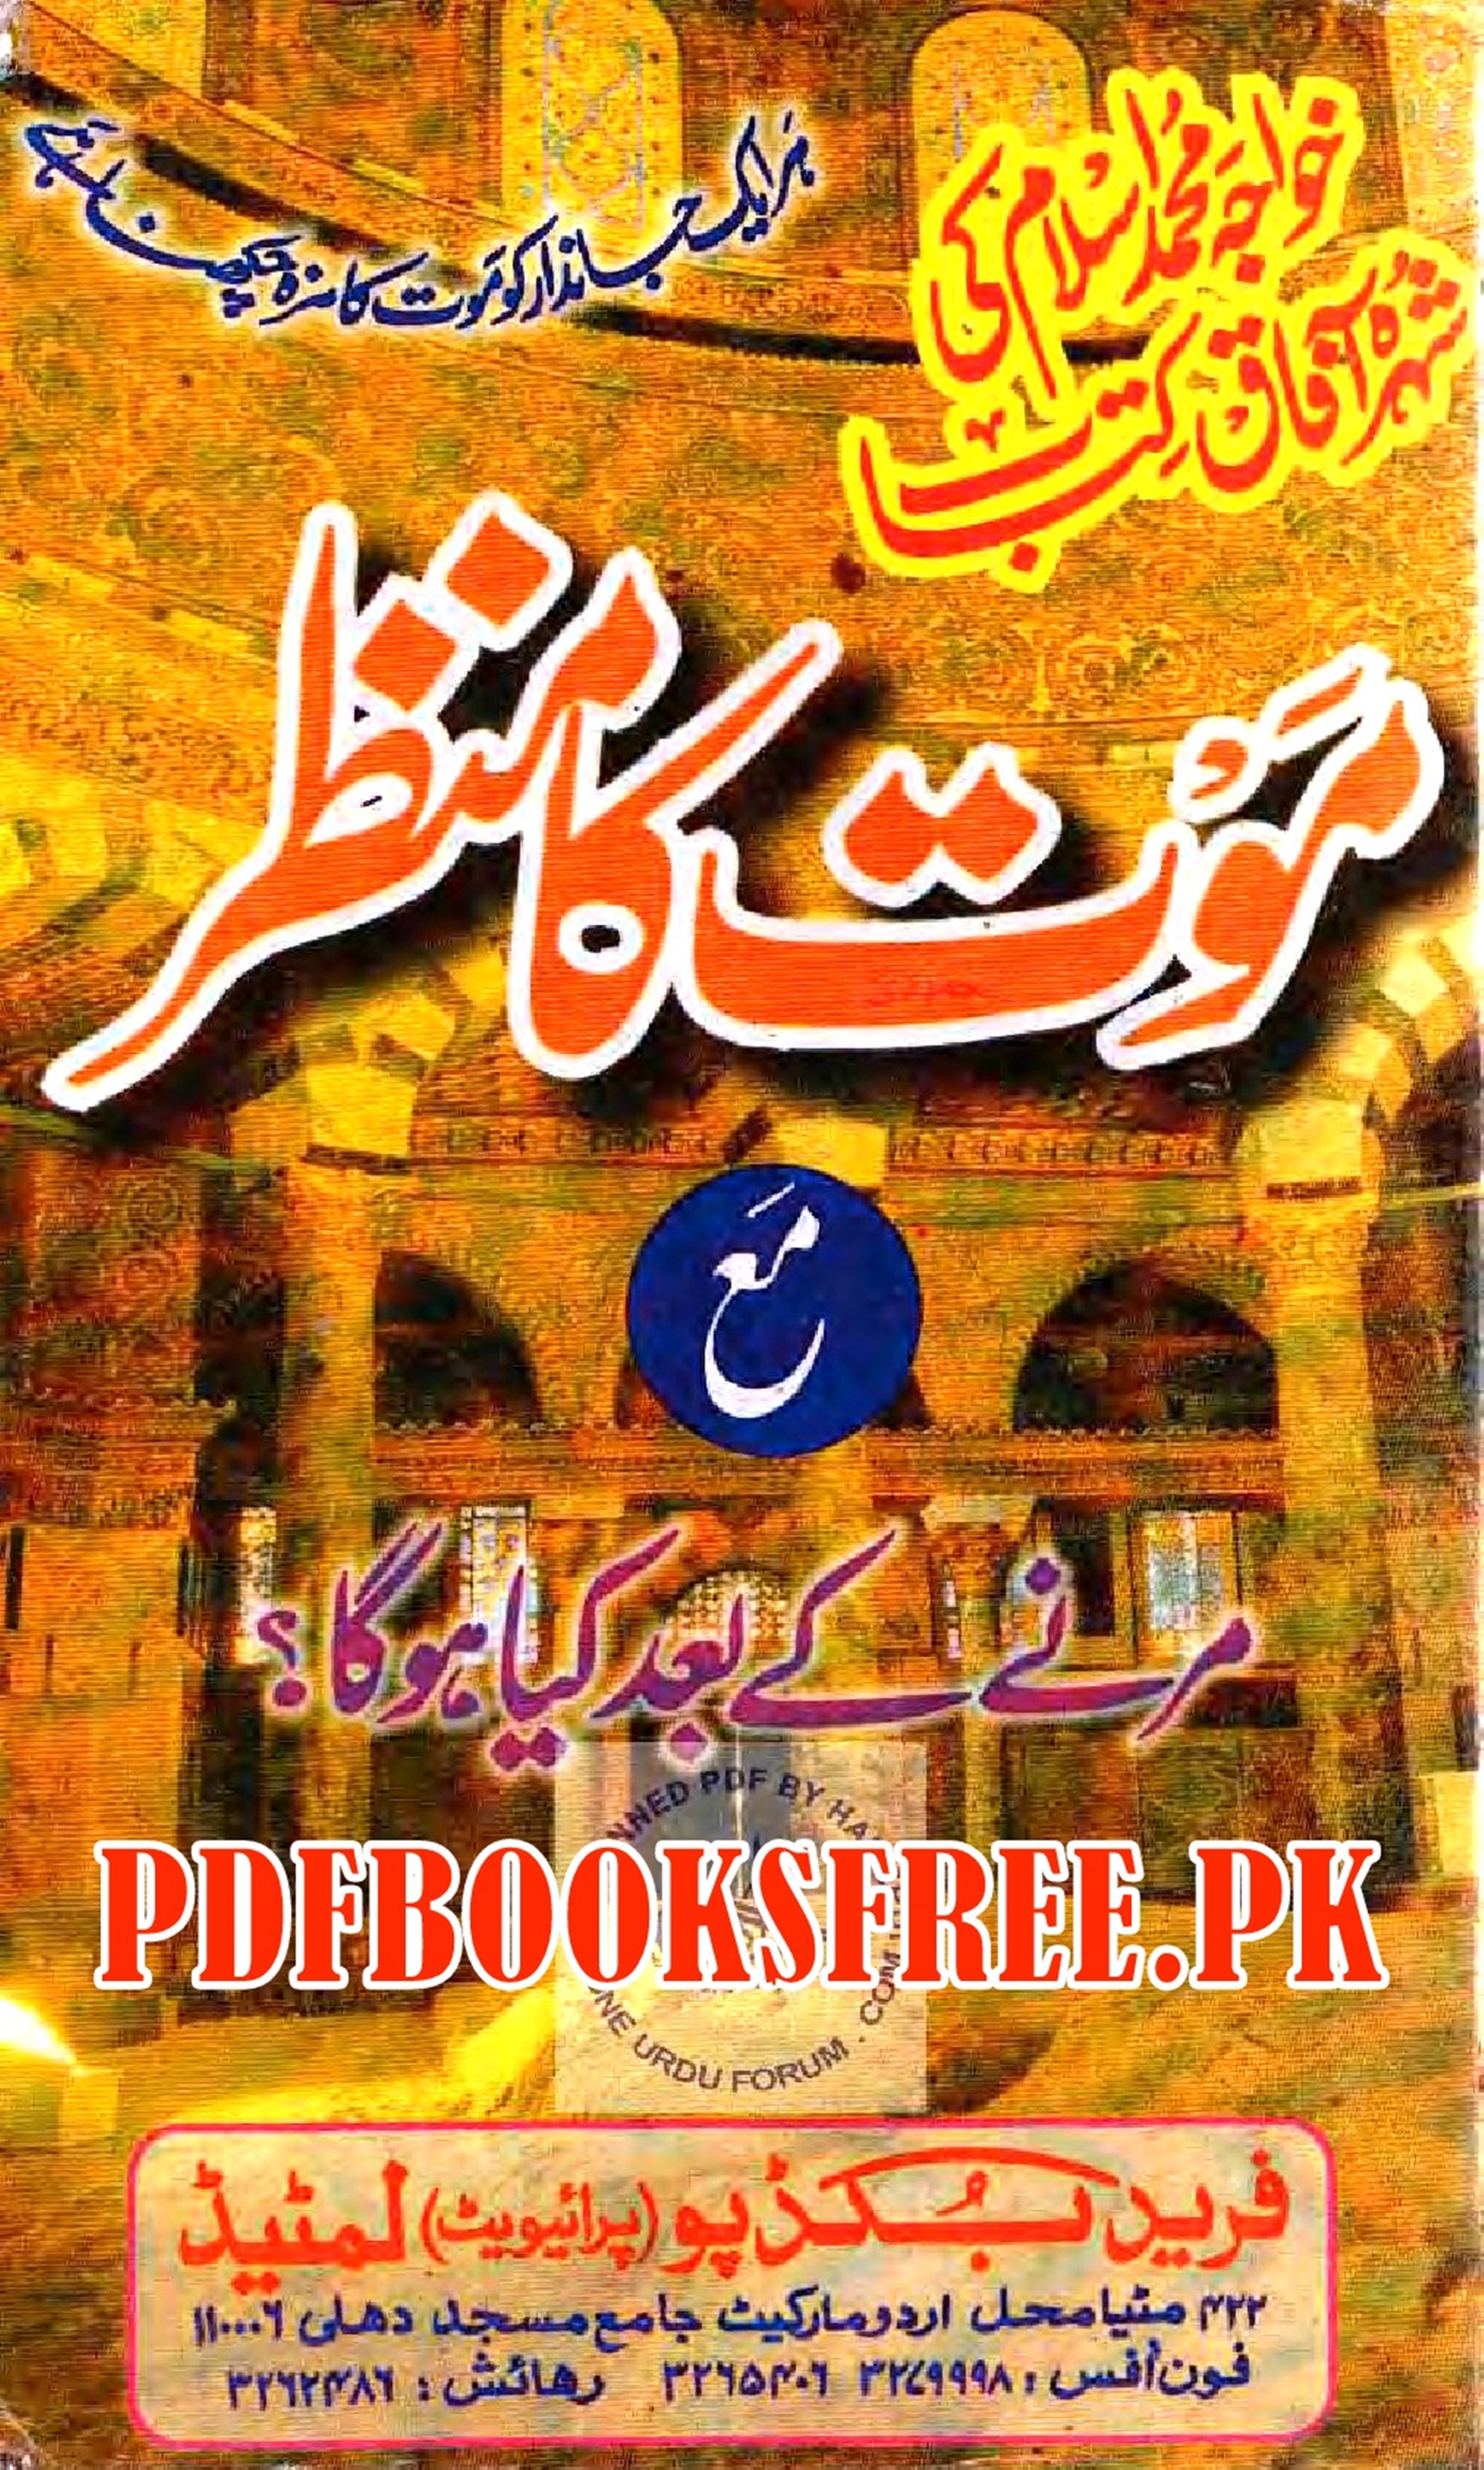 Marne ke baad kya hoga book in urdu pdf free download